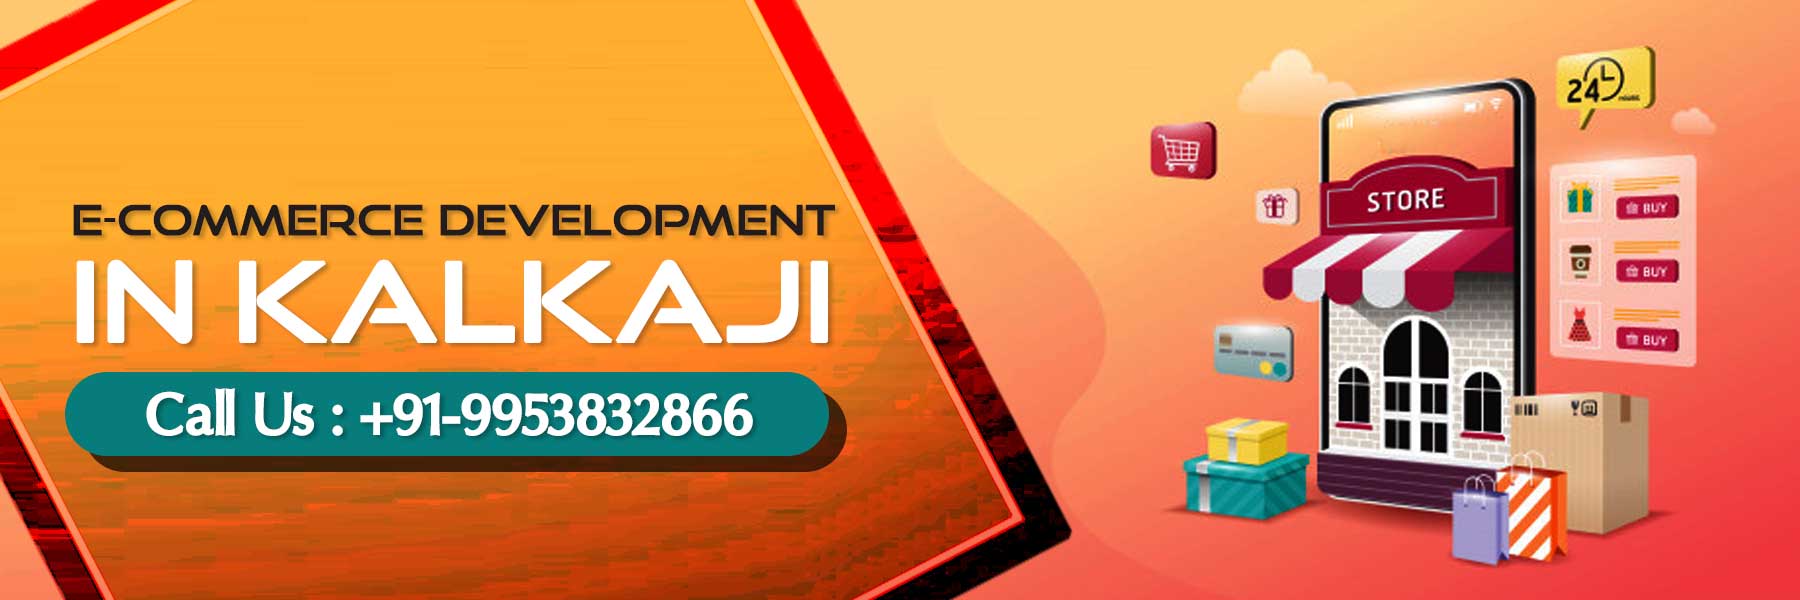 ecommerce development in Kalkaji